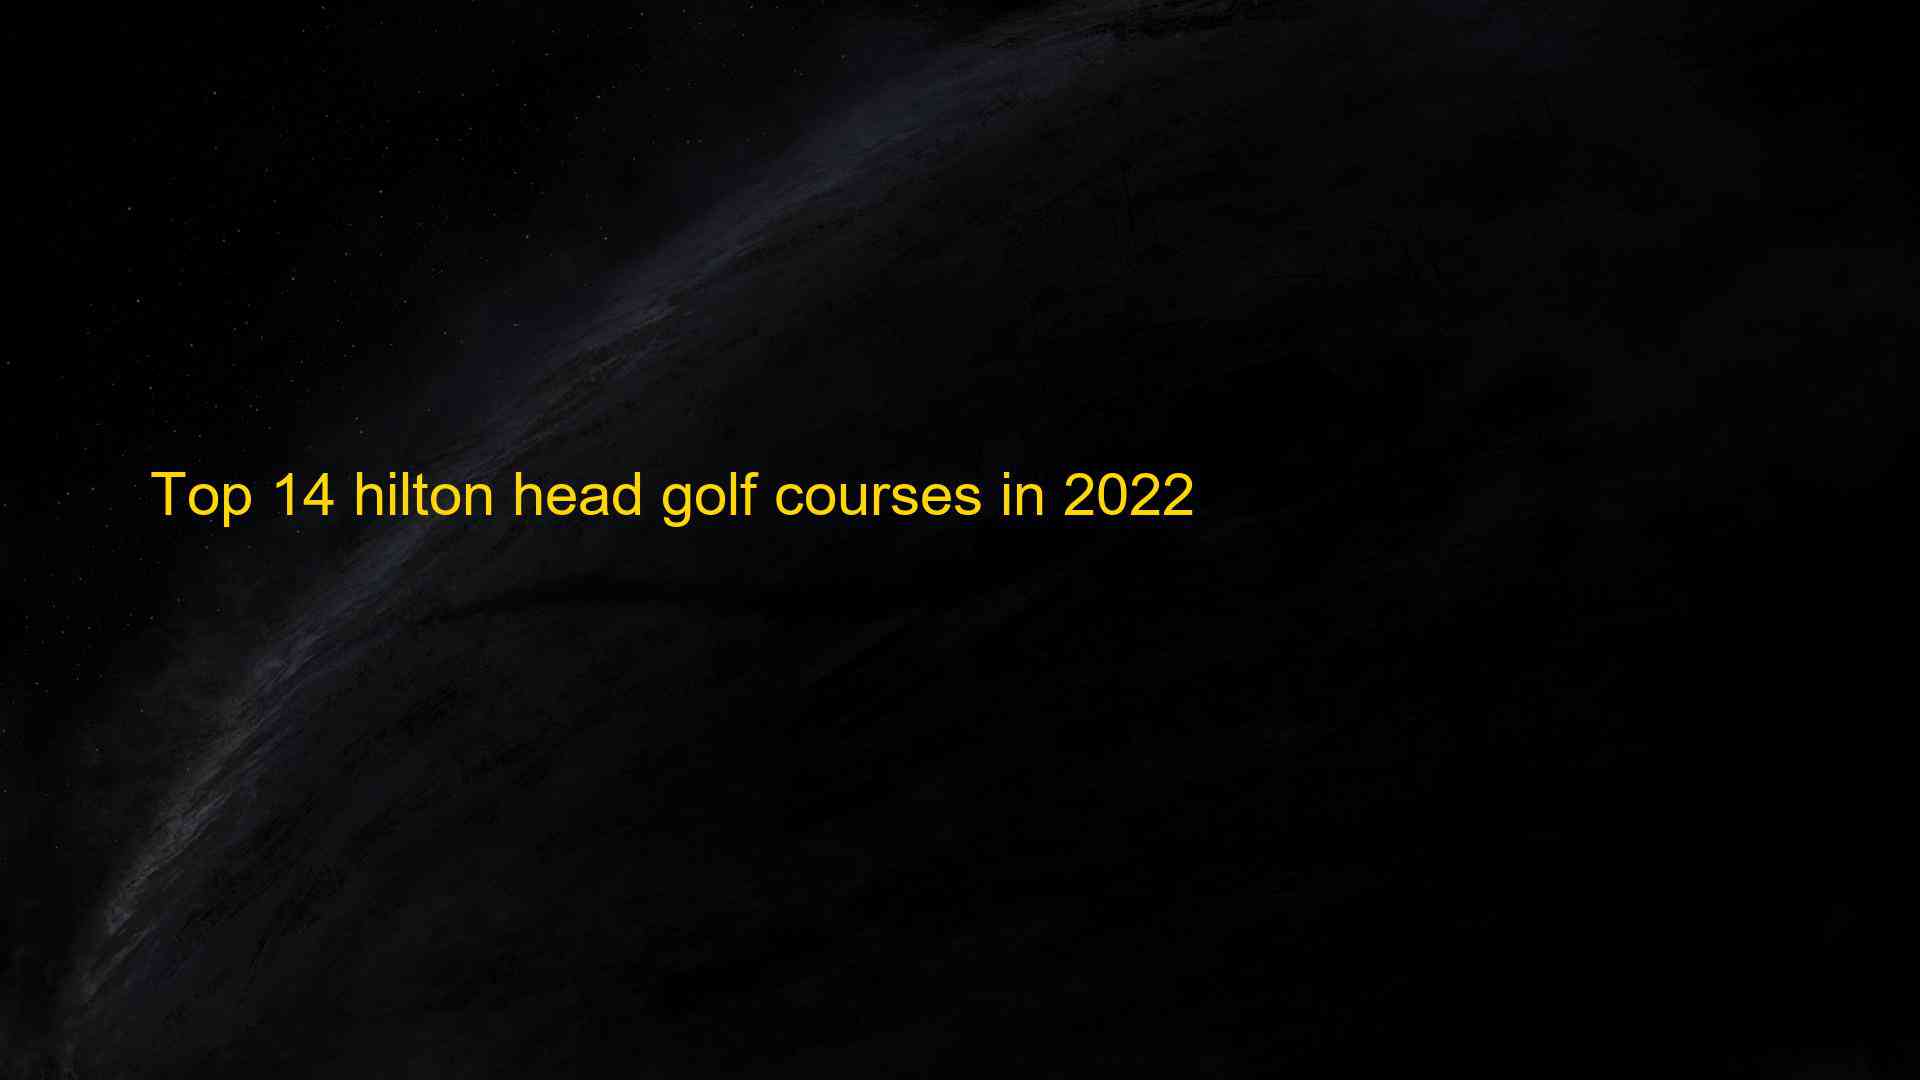 Top 14 hilton head golf courses in 2022 1660653942